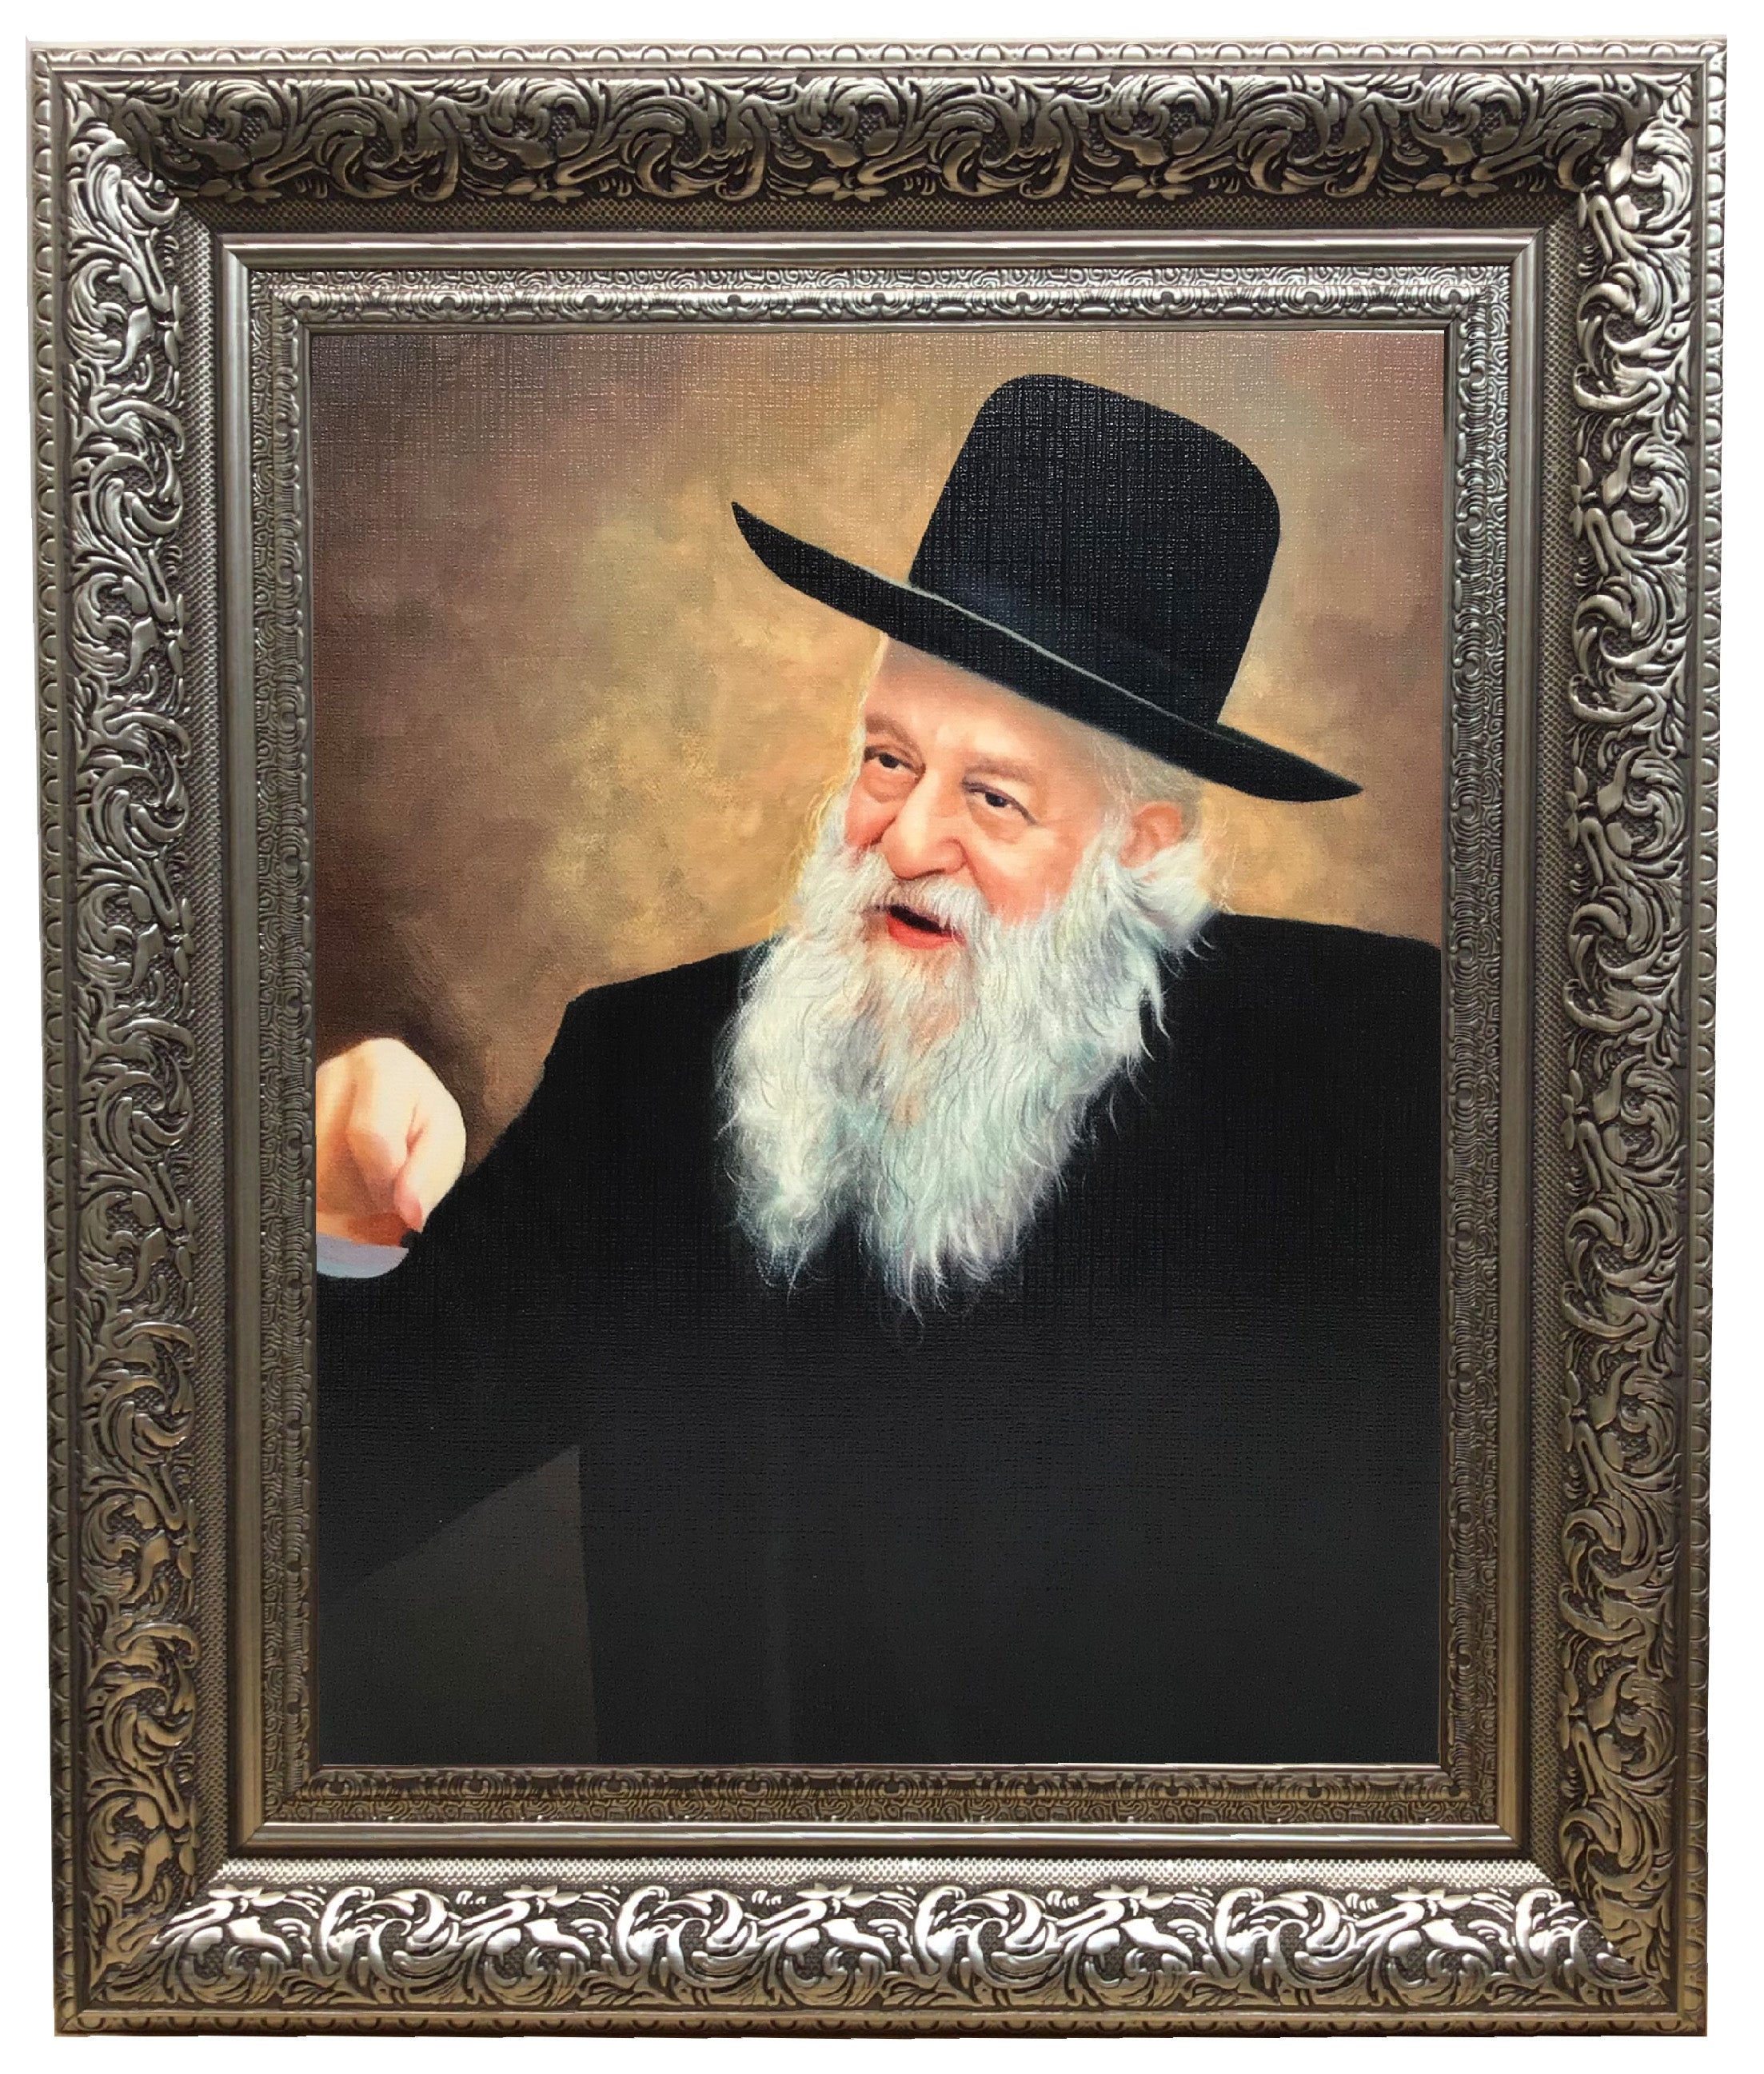 Rabbi Vachtfogel